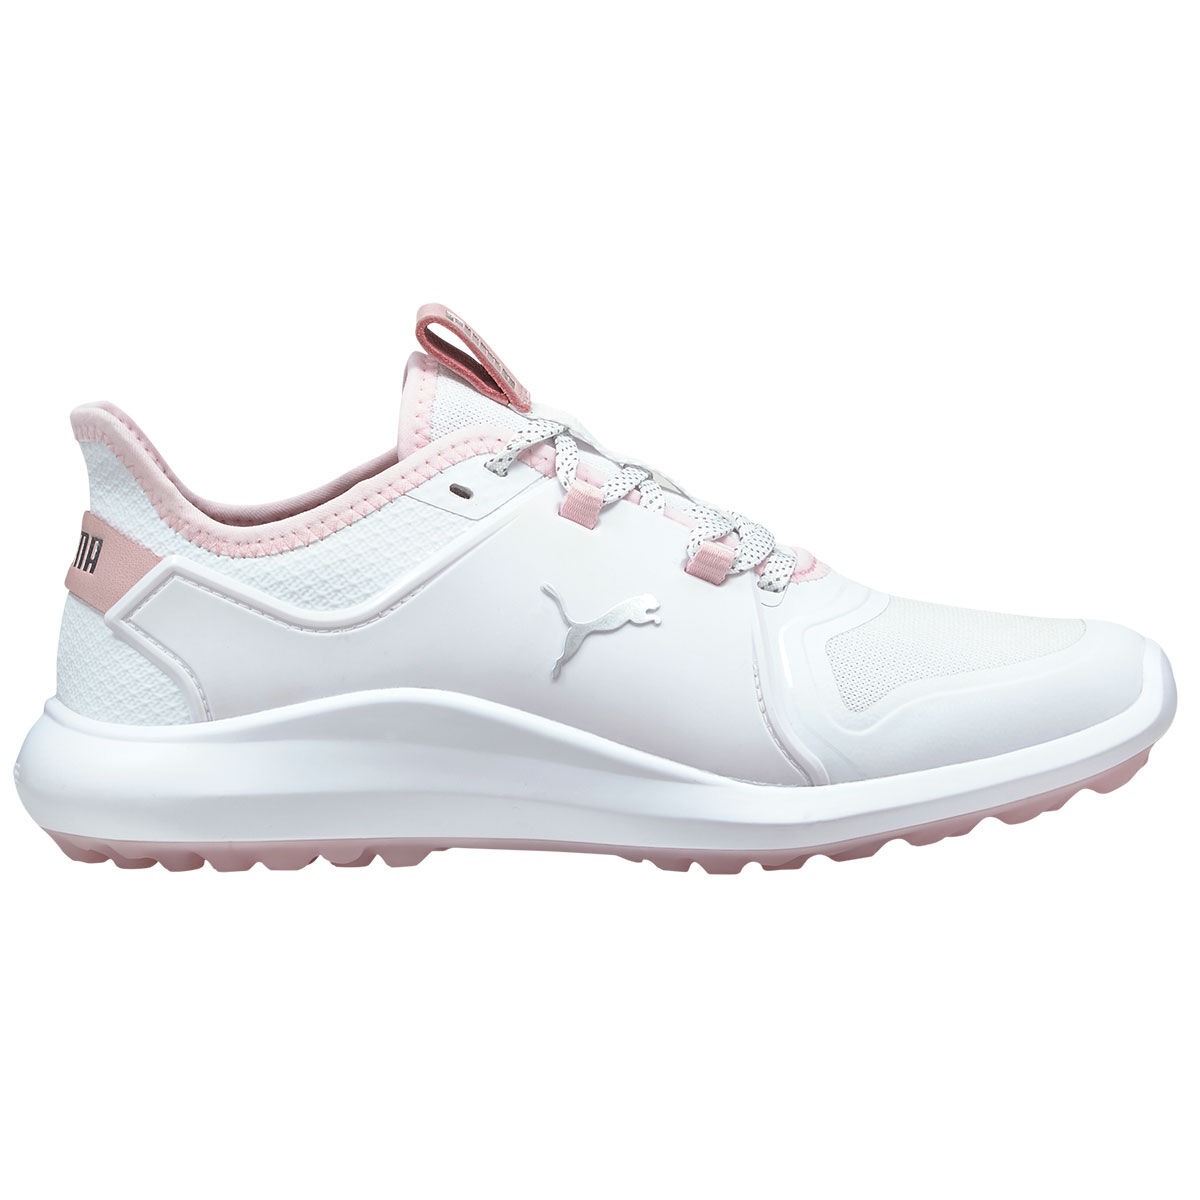 Chaussures PUMA Golf IGNITE FASTEN8 pour femmes, femme, 4, Blanc/Argent/Rose, Normal | Online Golf